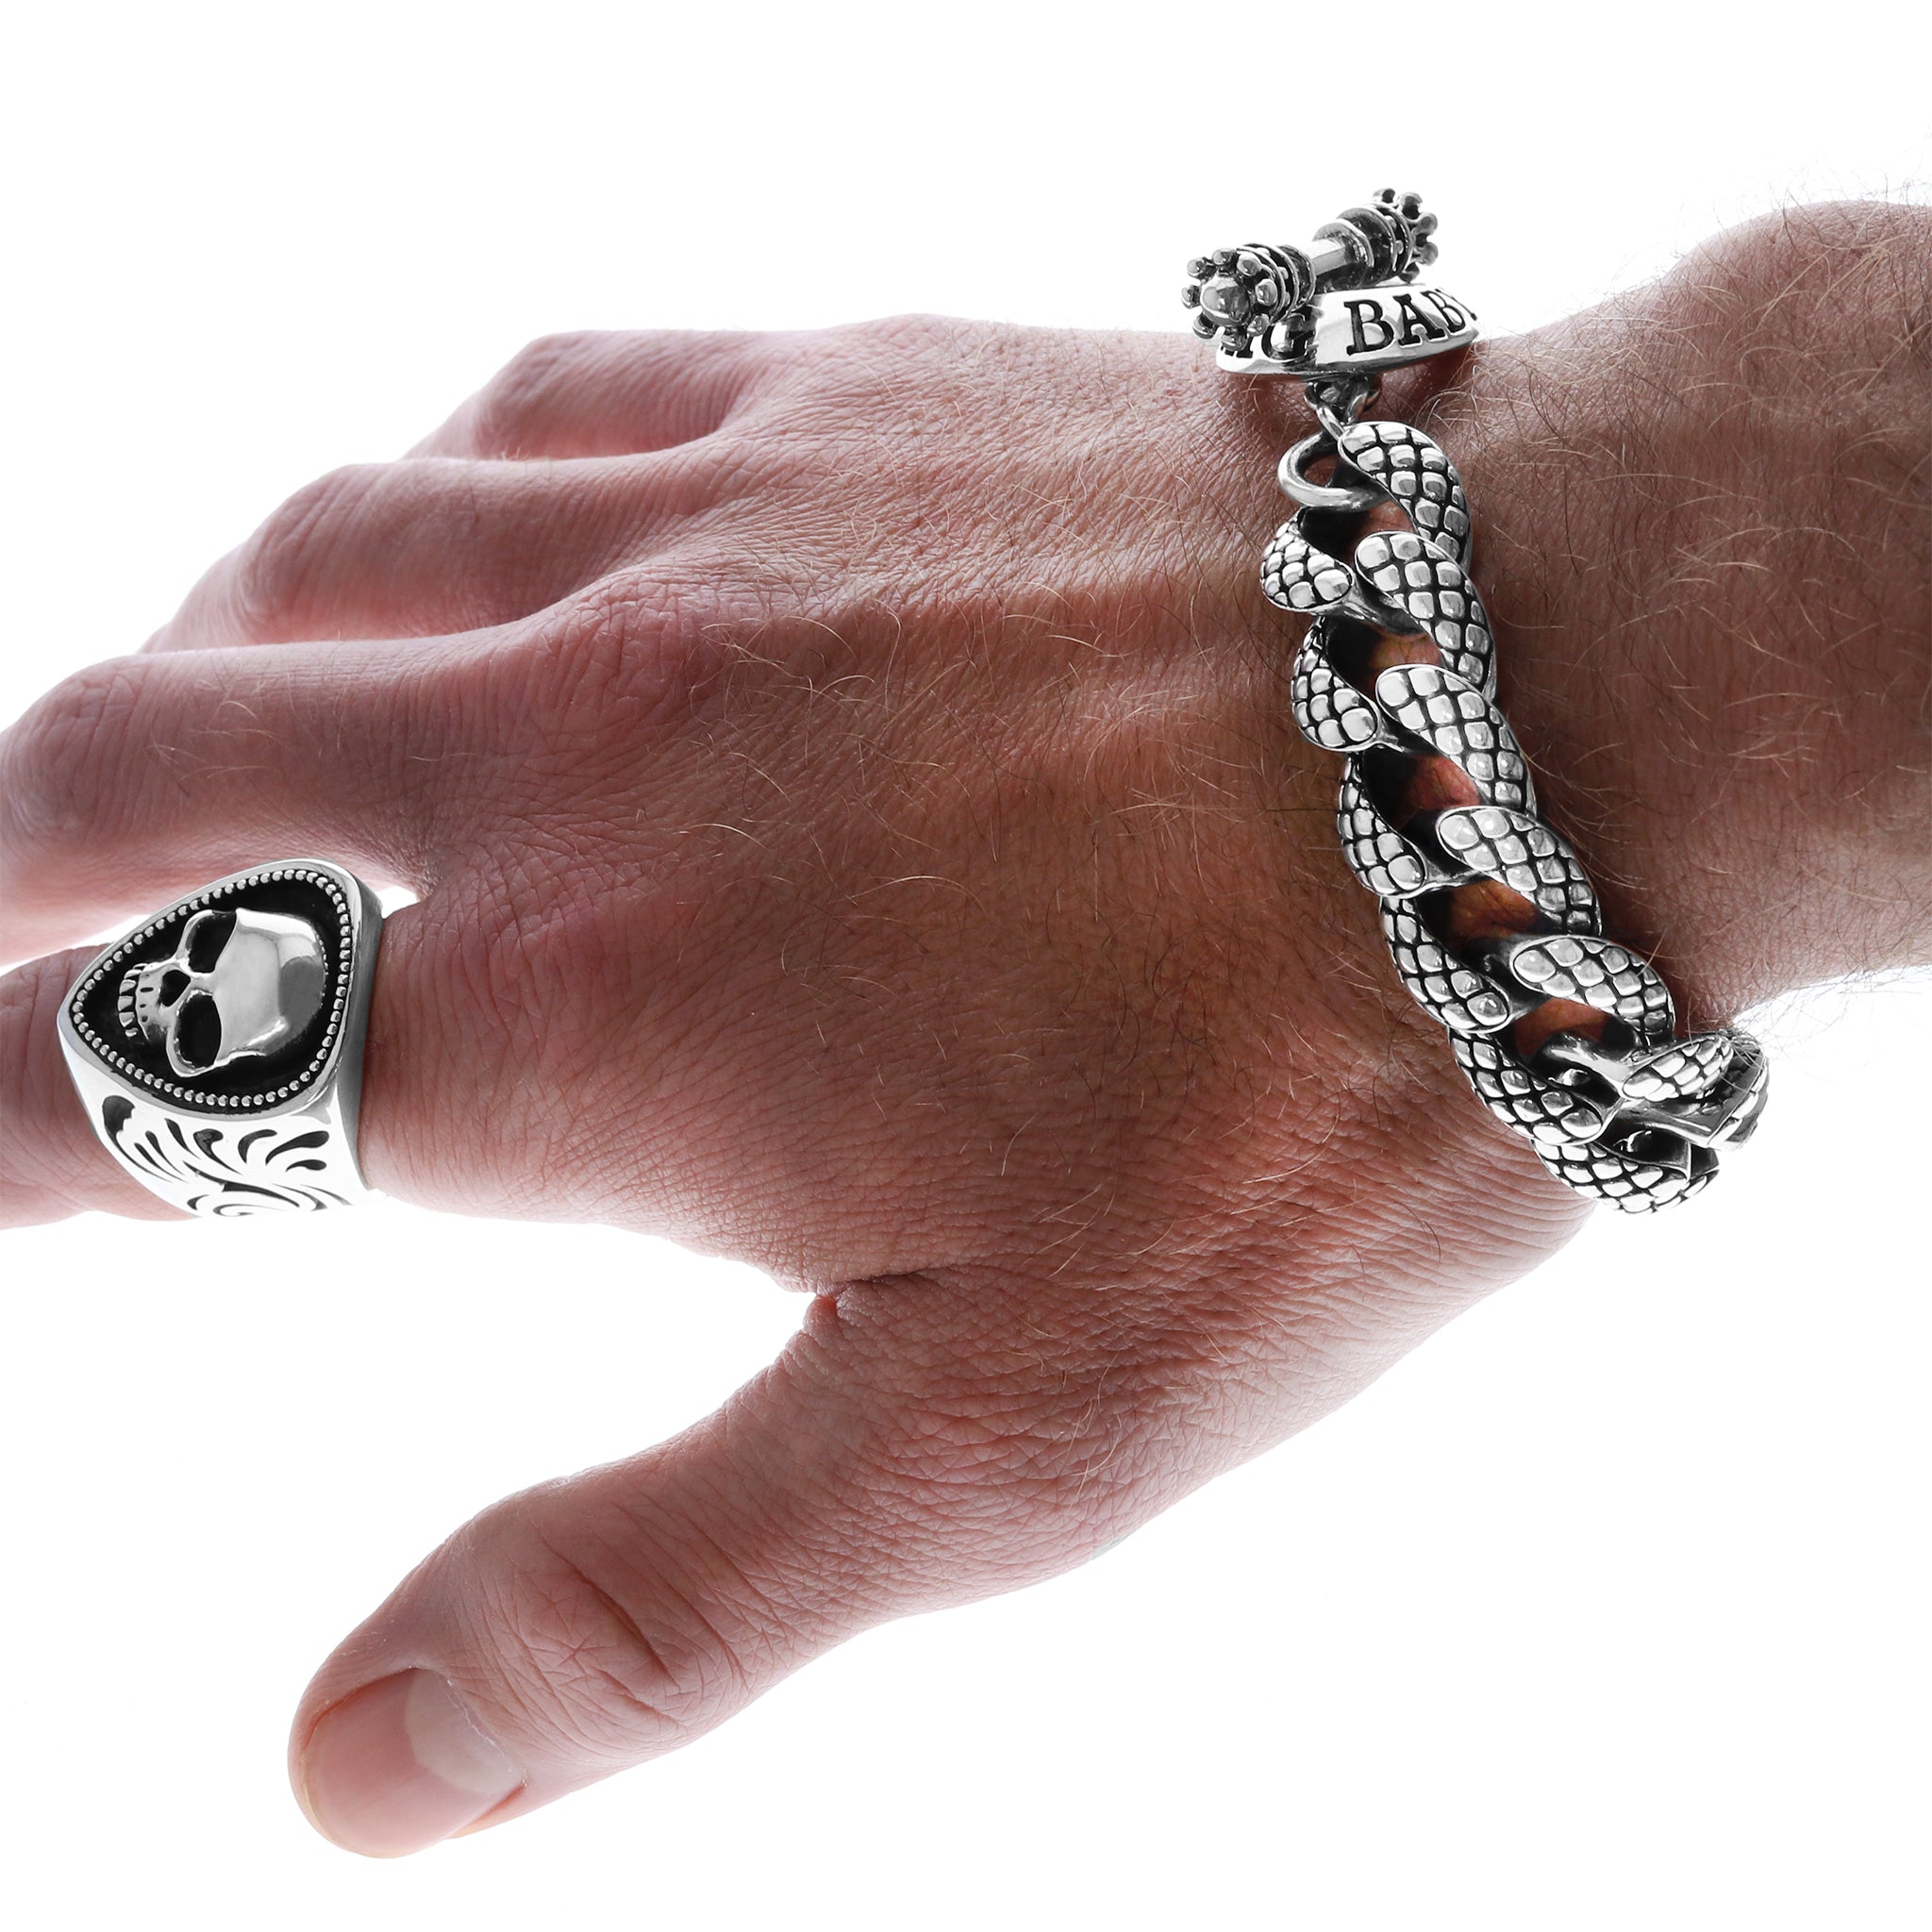 Silver Snake Link Textured Bracelet on model's hand